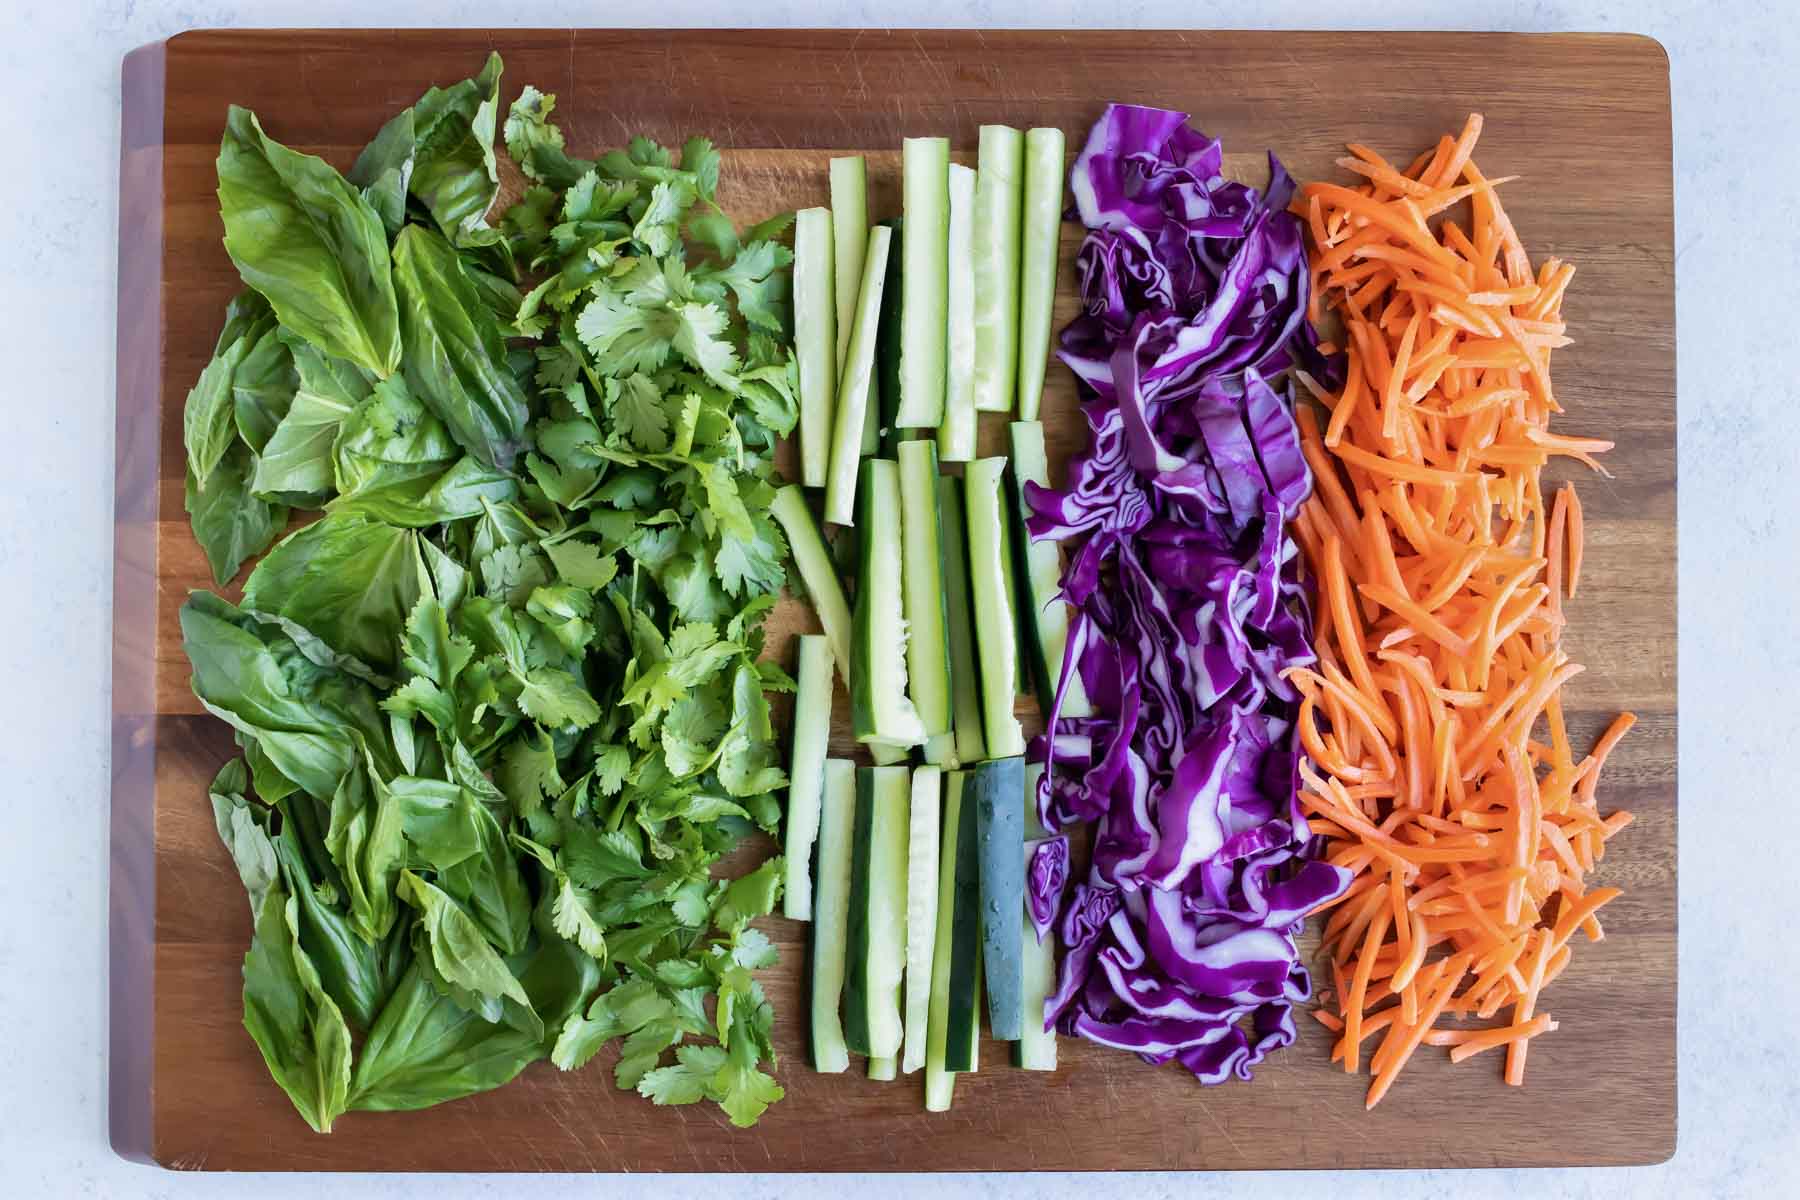 Fresh veggies are cut into strips.